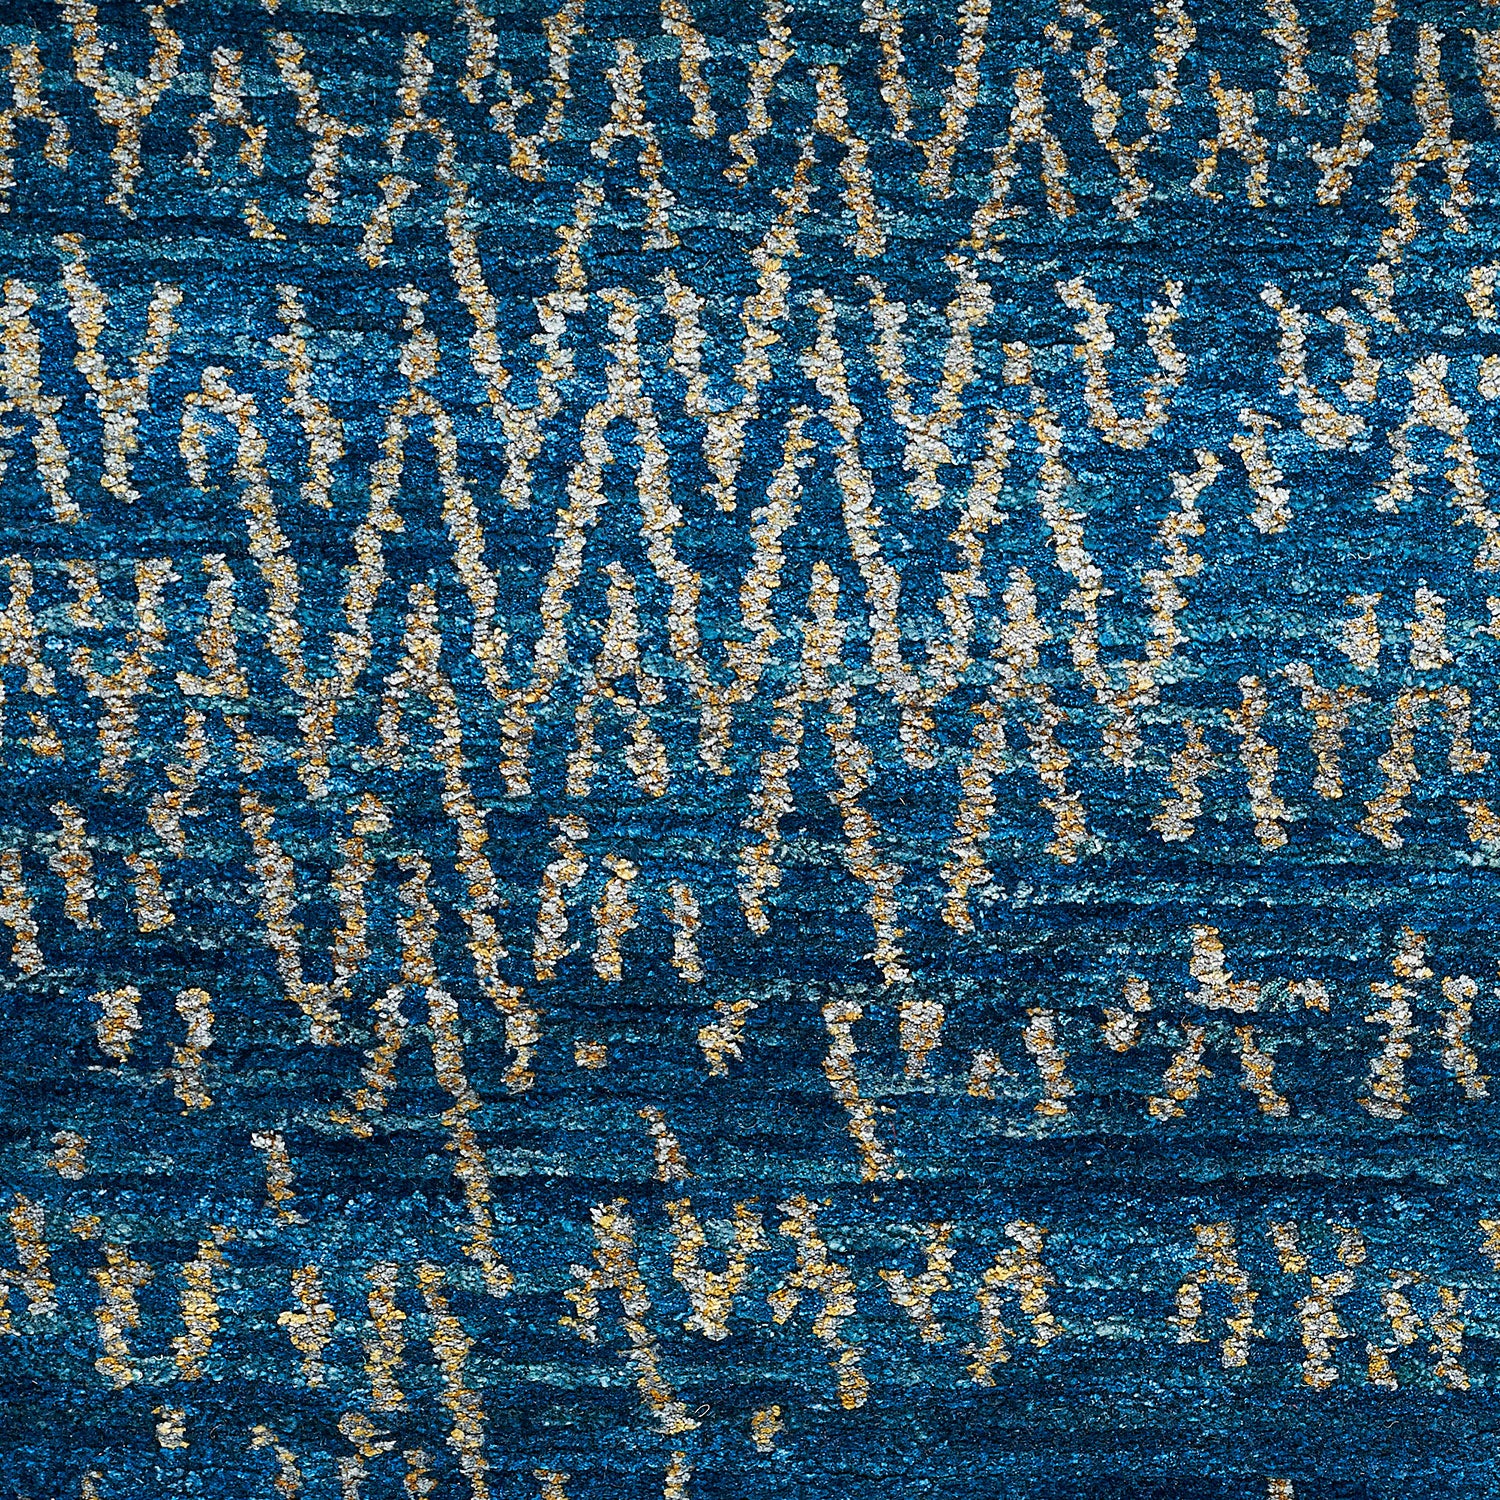 Rich blue fabric with golden streaks creates luxurious, ornamental texture.